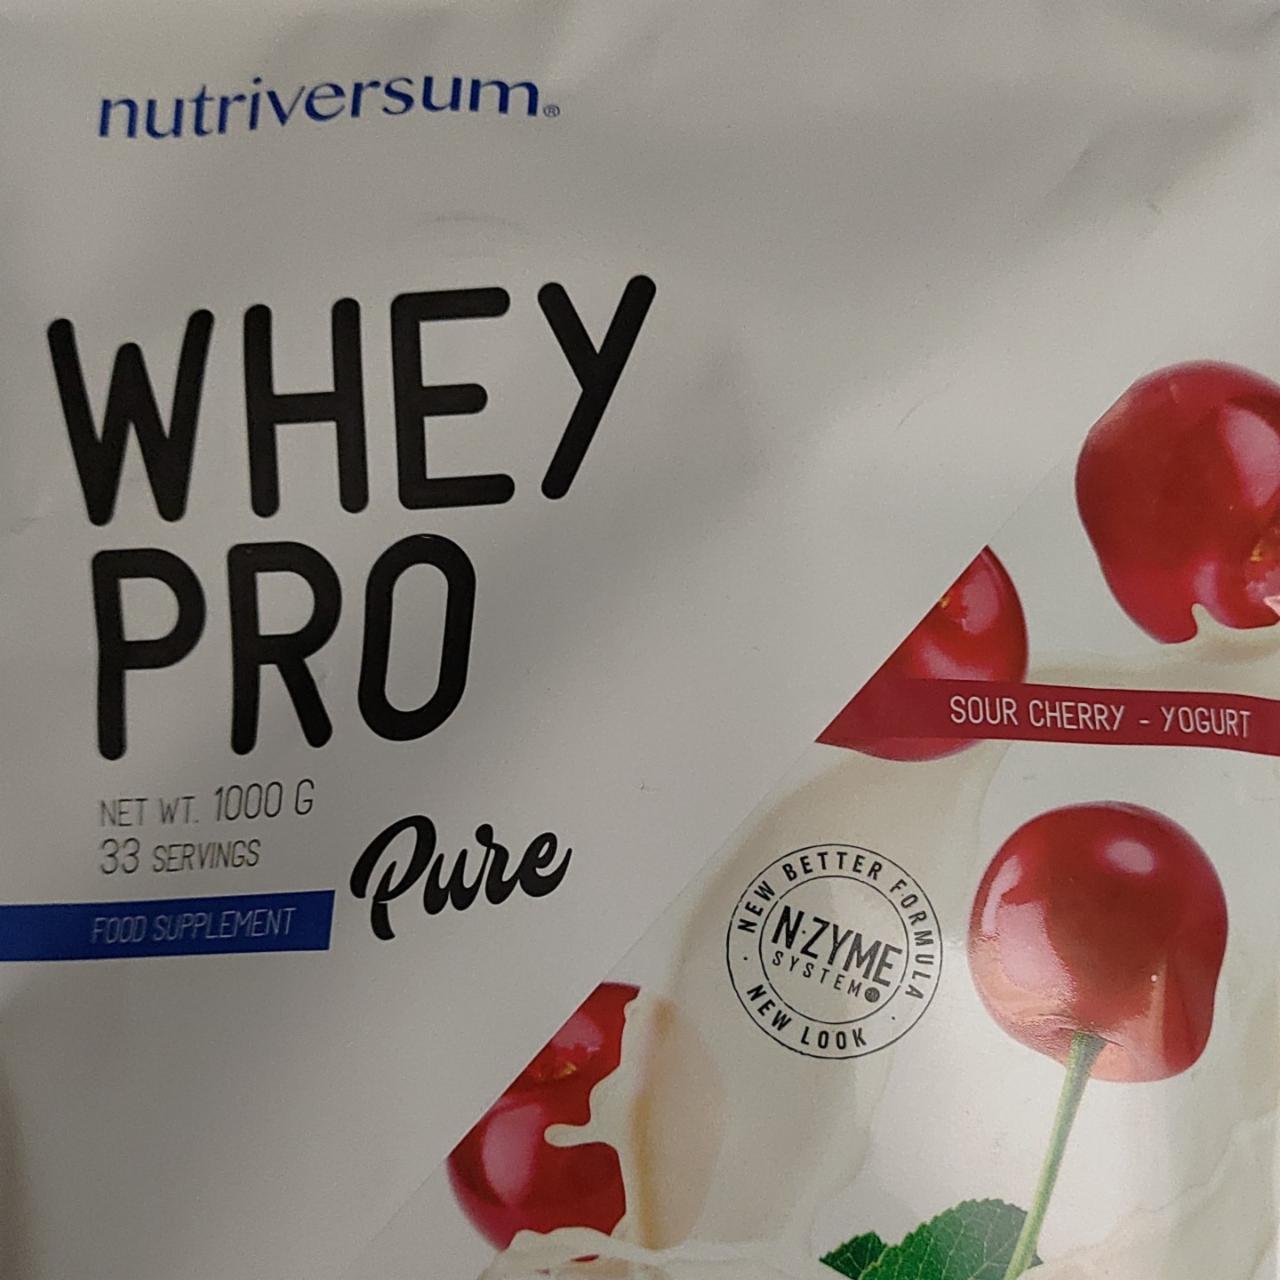 Képek - Whey Pro Sour Cherry - Yogurt Nutriversum